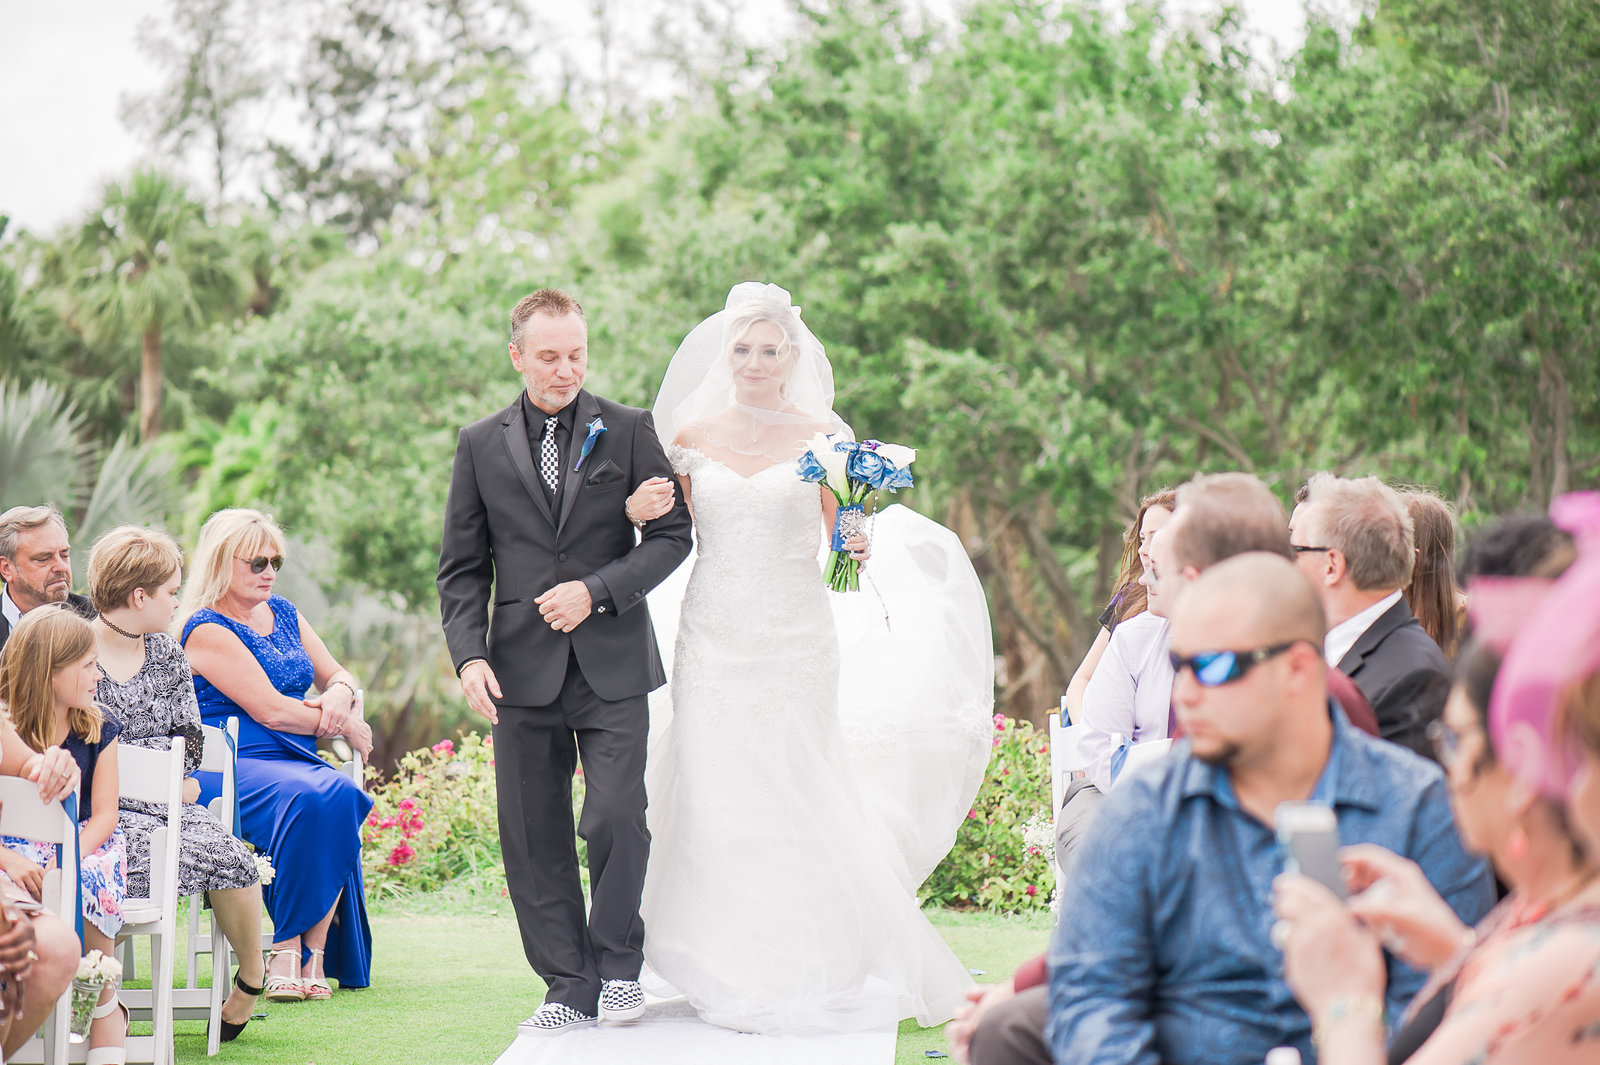 Wedding Aisle - Myacoo Country Club Wedding - Palm Beach Wedding Photography by Palm Beach Photography, Inc.